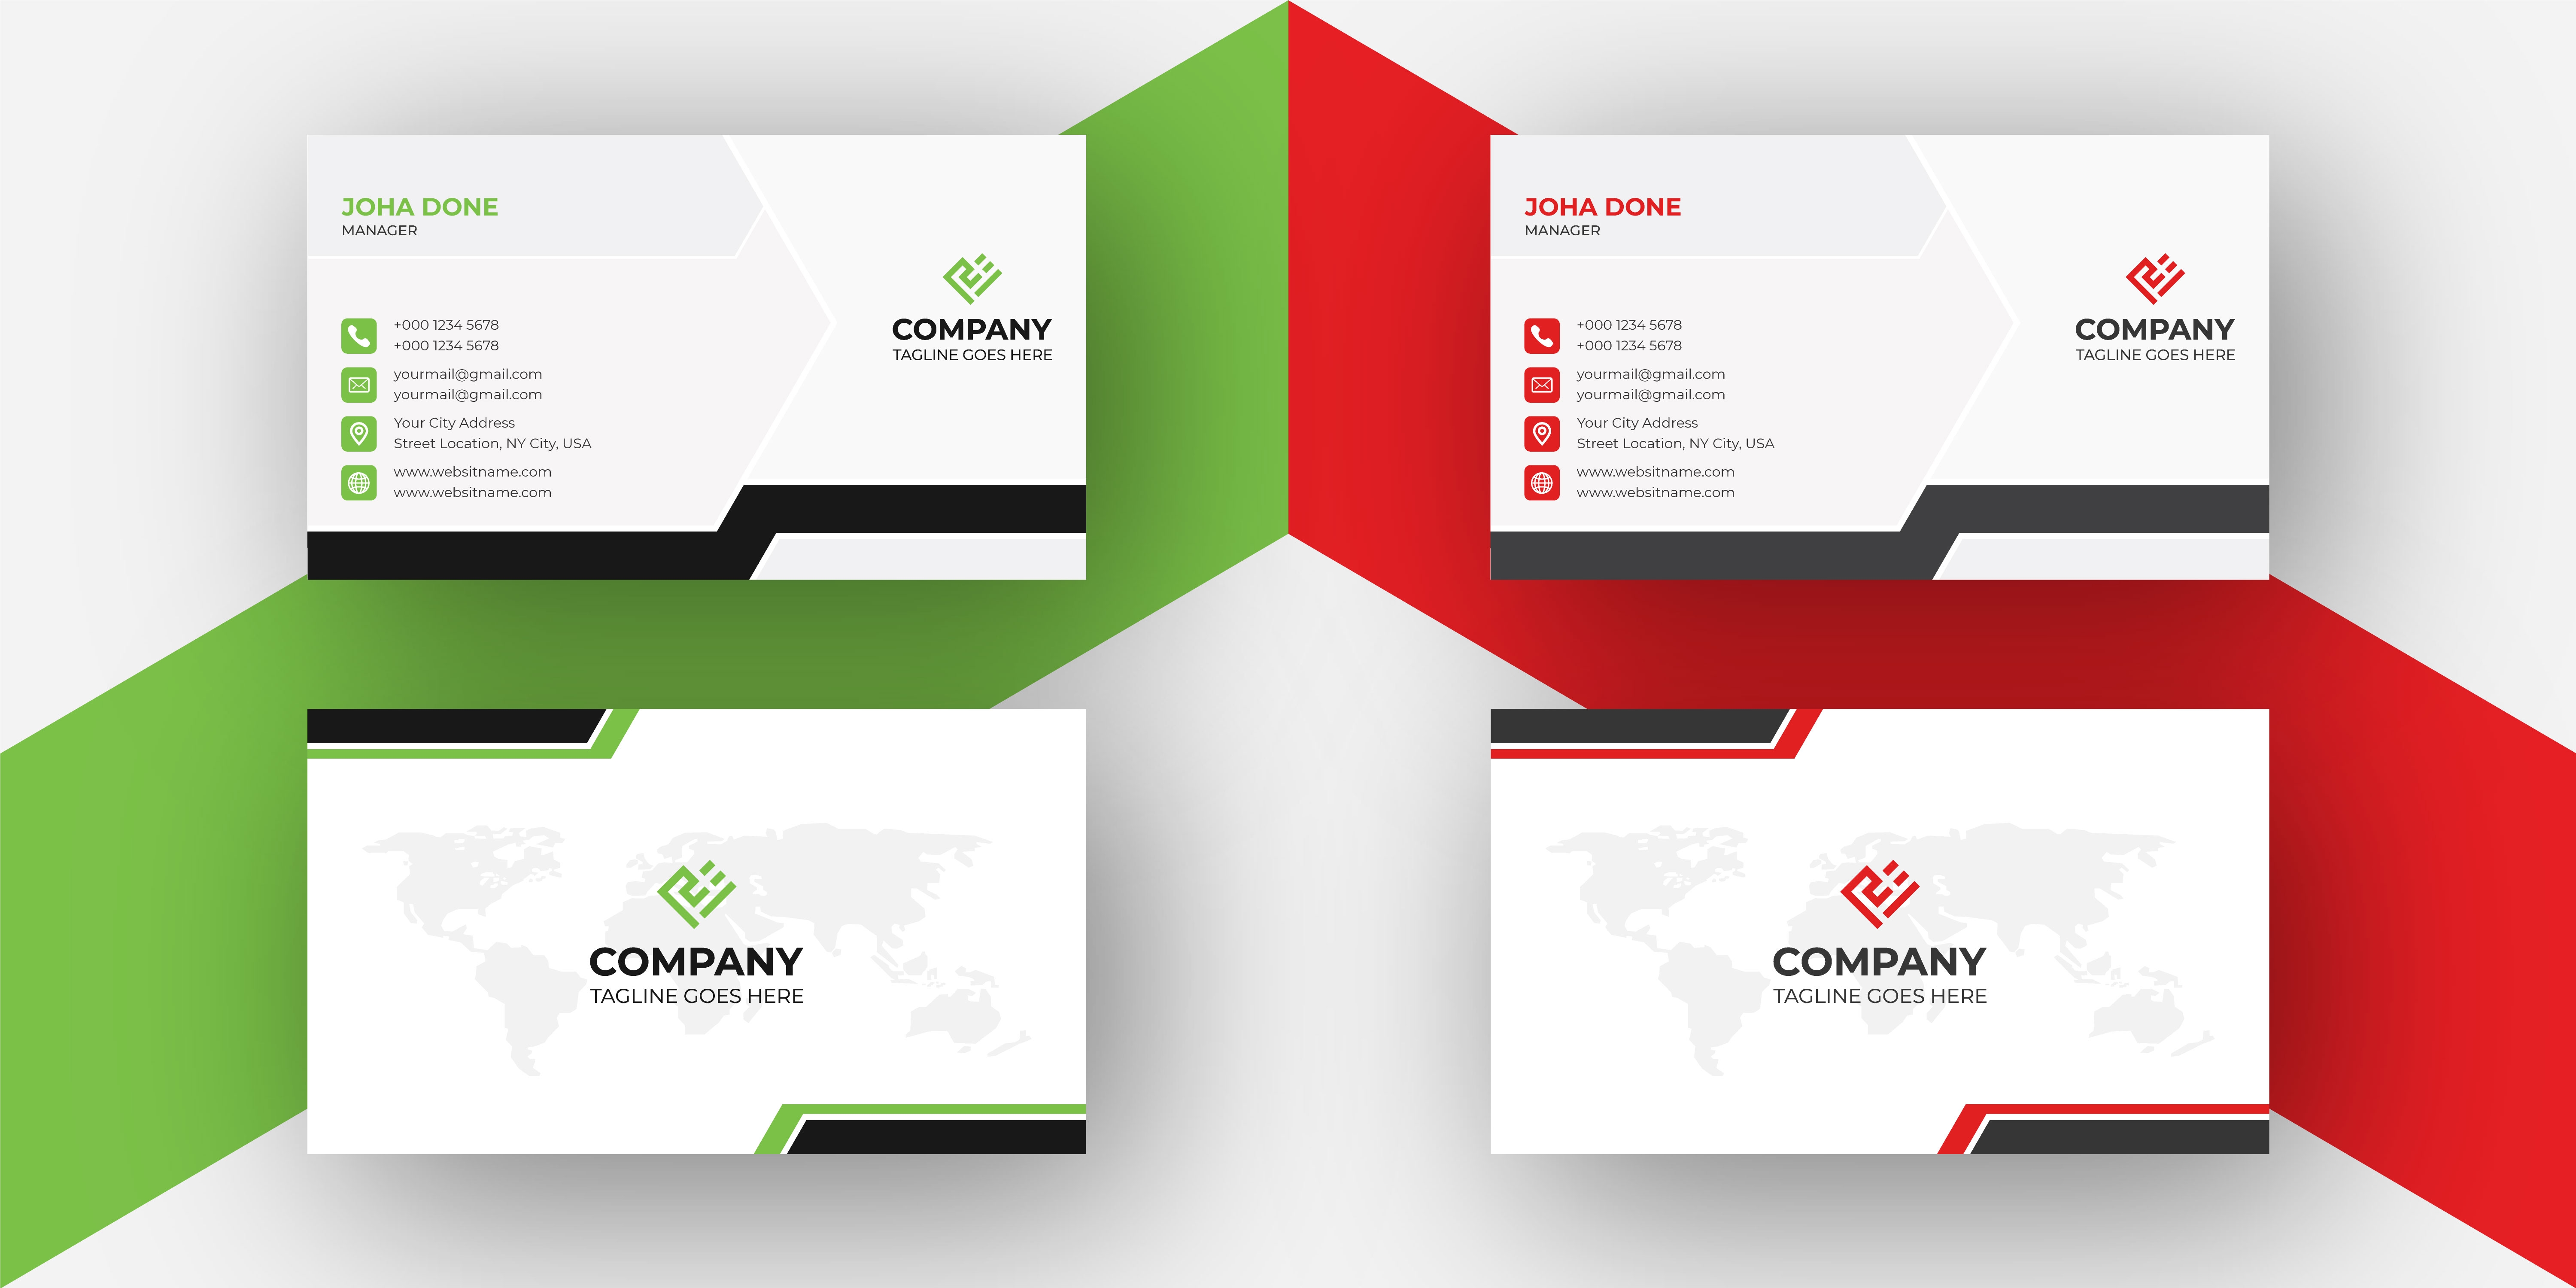 Creative modern business card design template